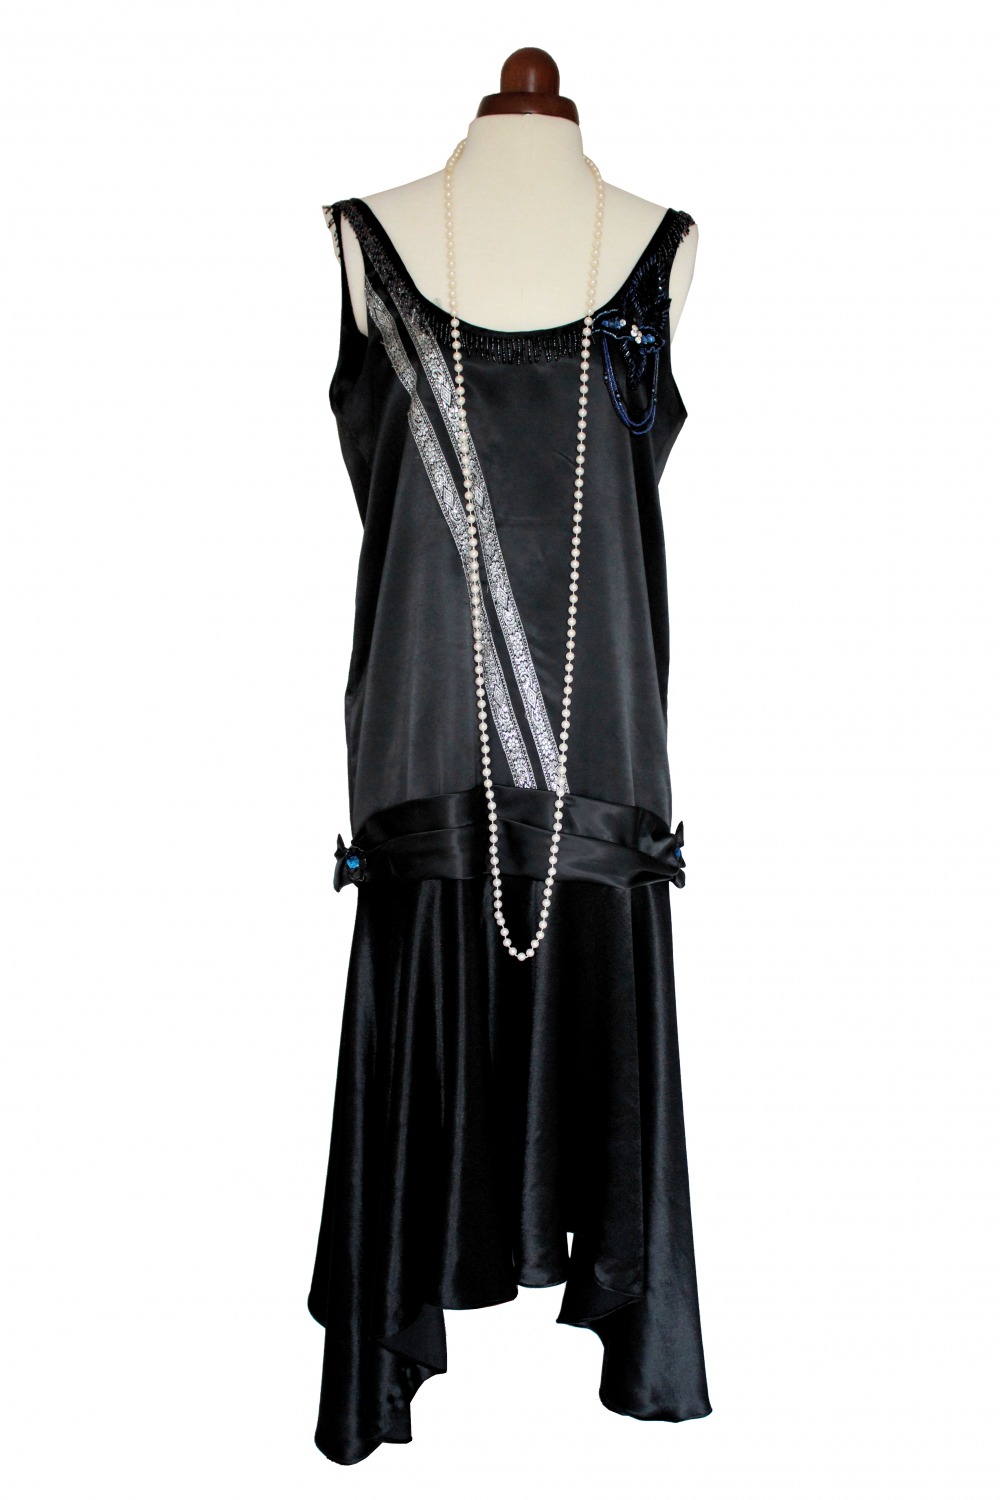 Ladies 1920s 1930s Flapper Charleston costume Size 12 - 14 Image